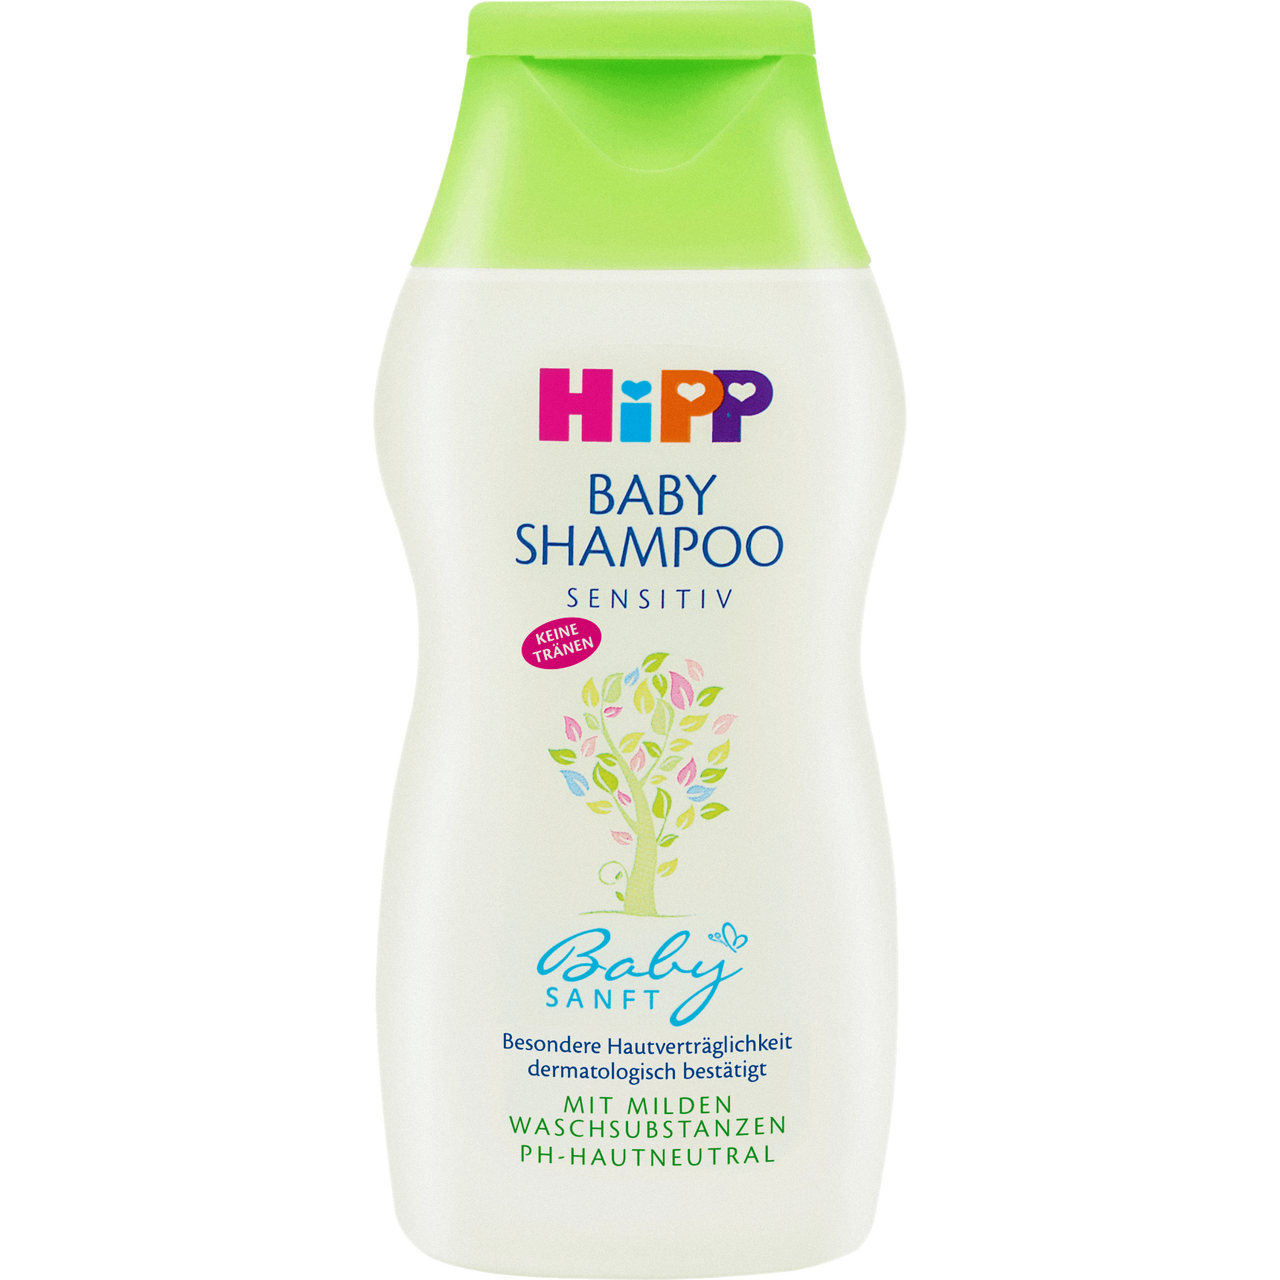 uczulenie na szampon hipp